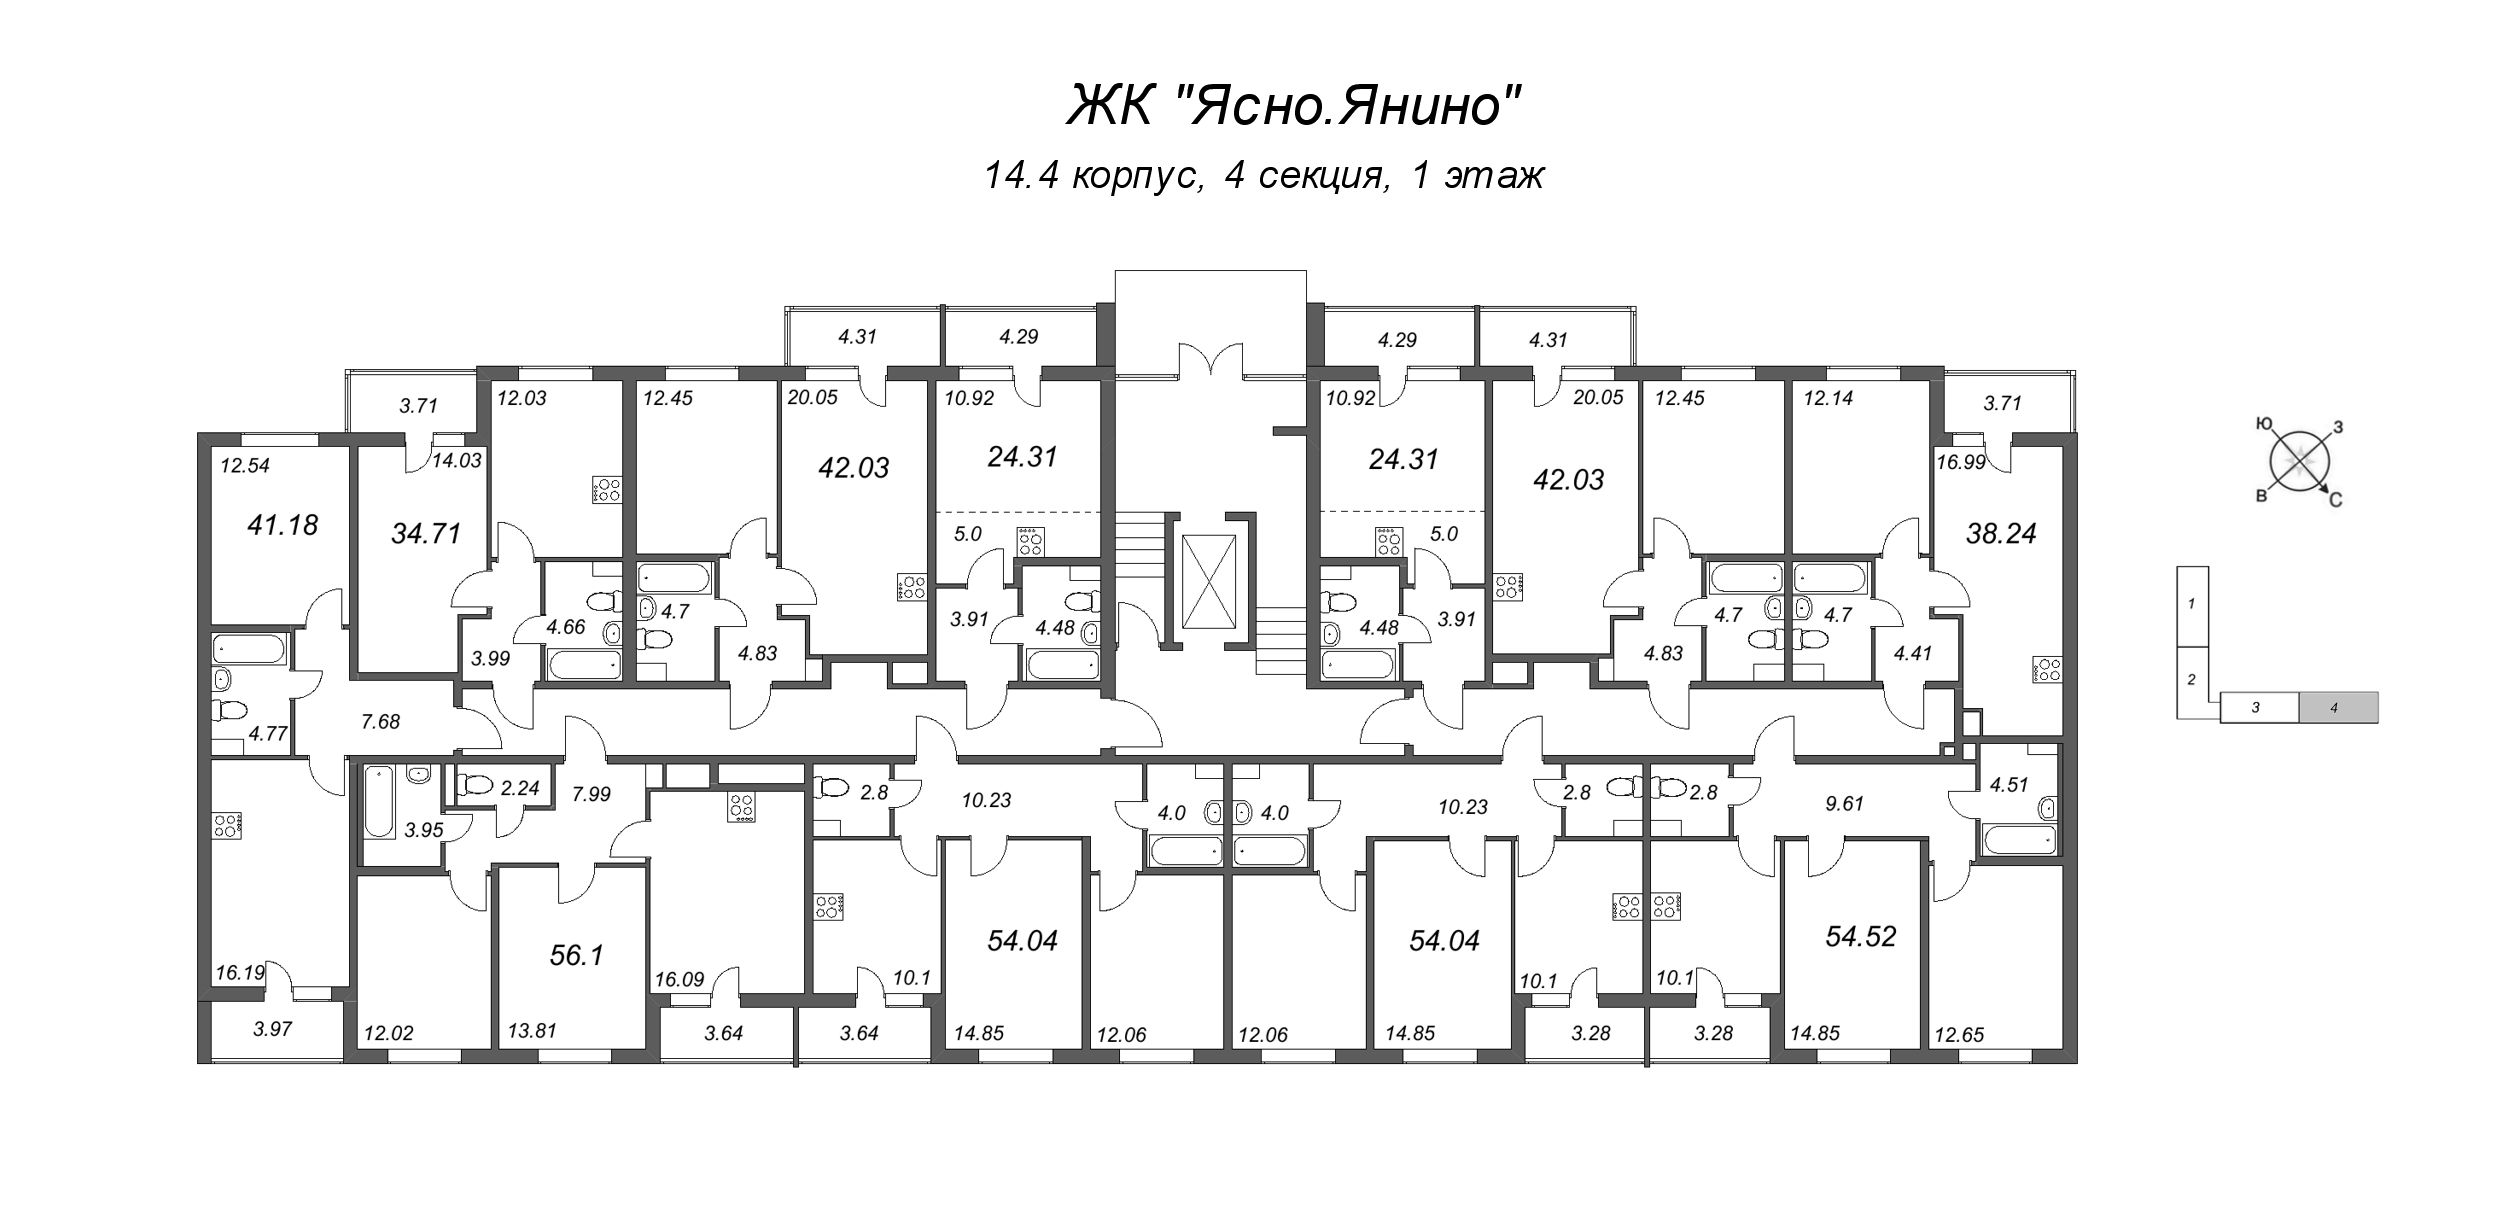 2-комнатная (Евро) квартира, 38.24 м² - планировка этажа